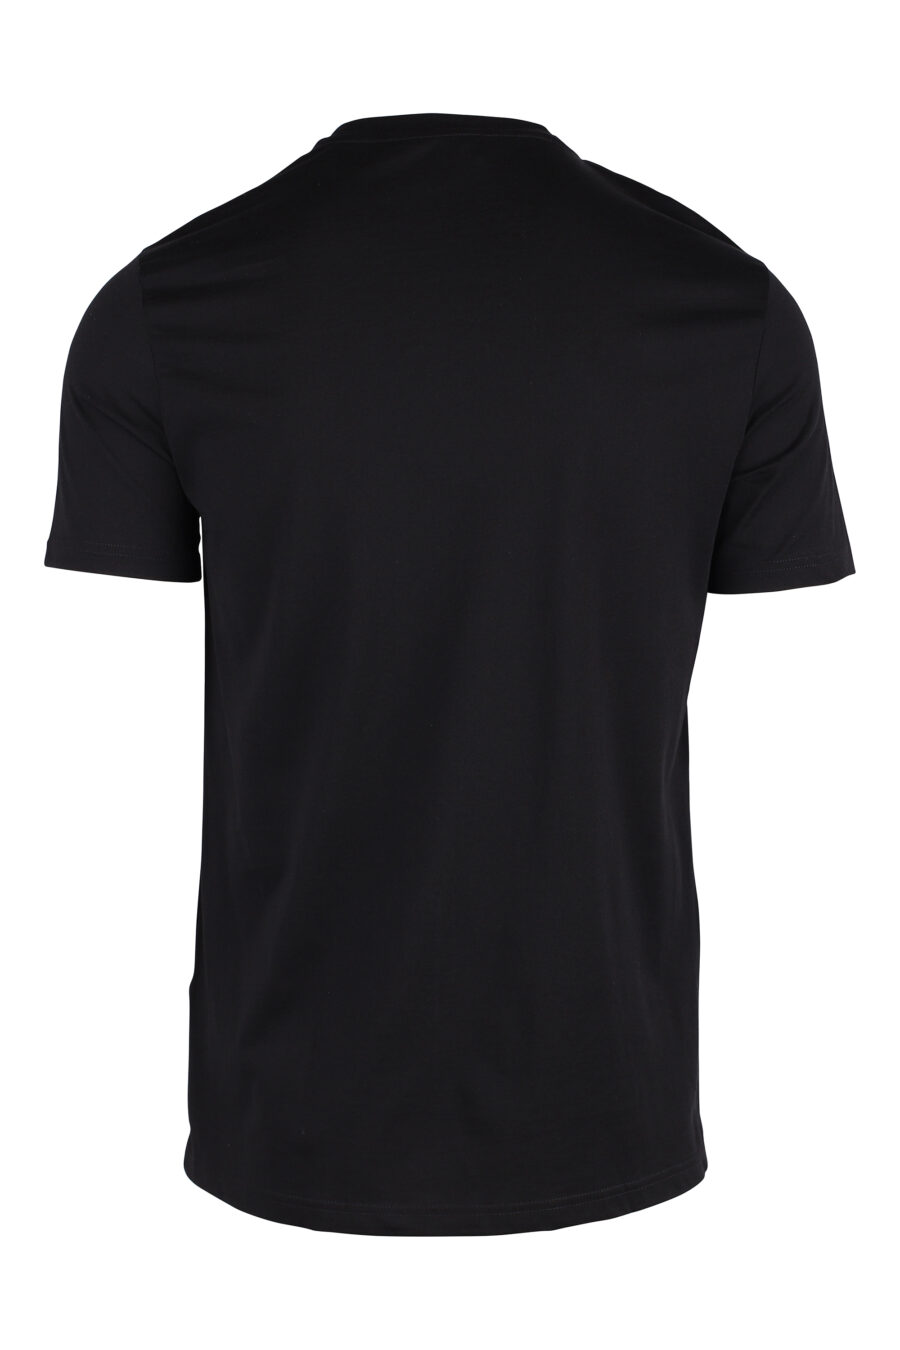 T-shirt noir avec logo brodé blanc - IMG 8564